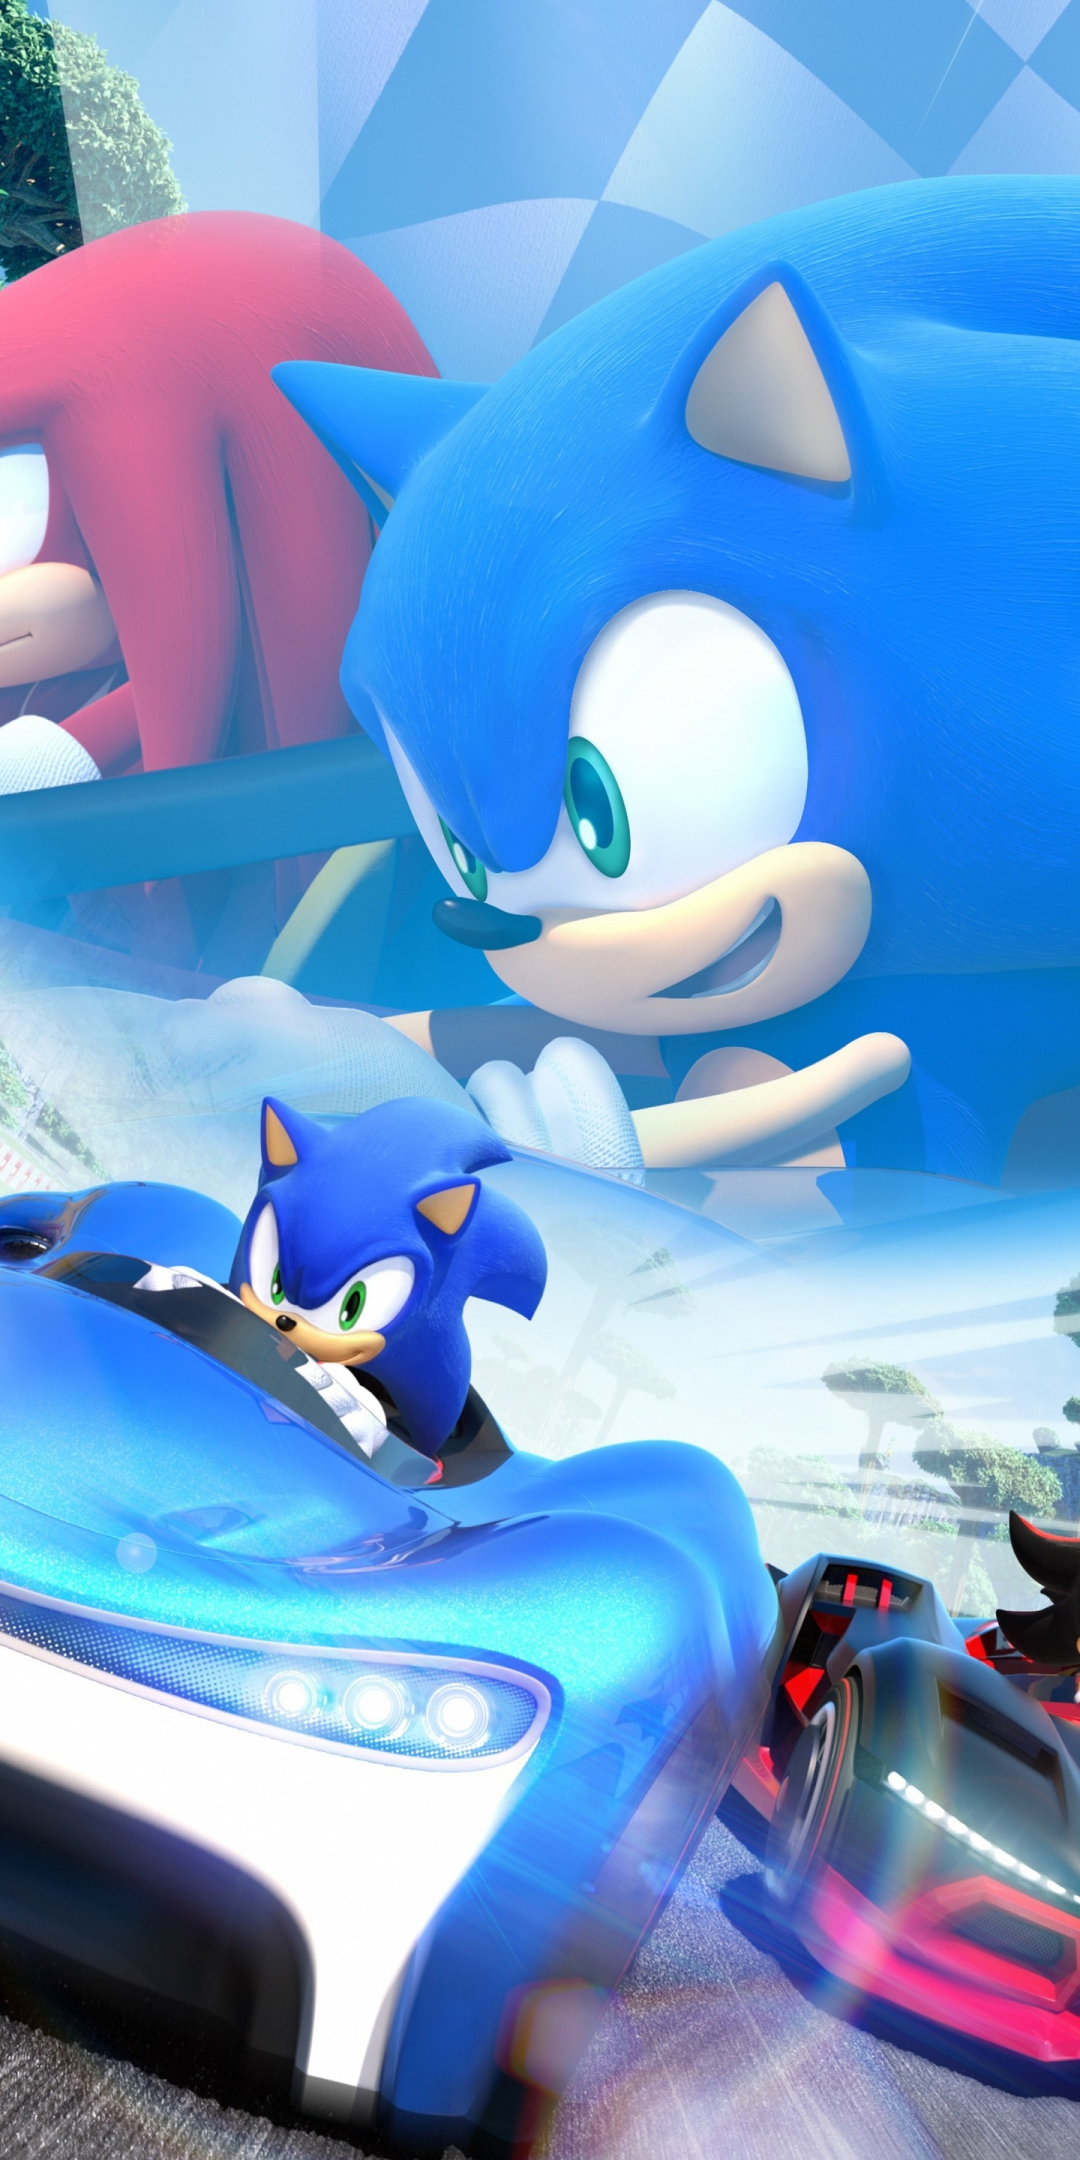 Sonic The Hedgehog, Video game, kart racing game, Nintendo, 1080x2160 wallpaper